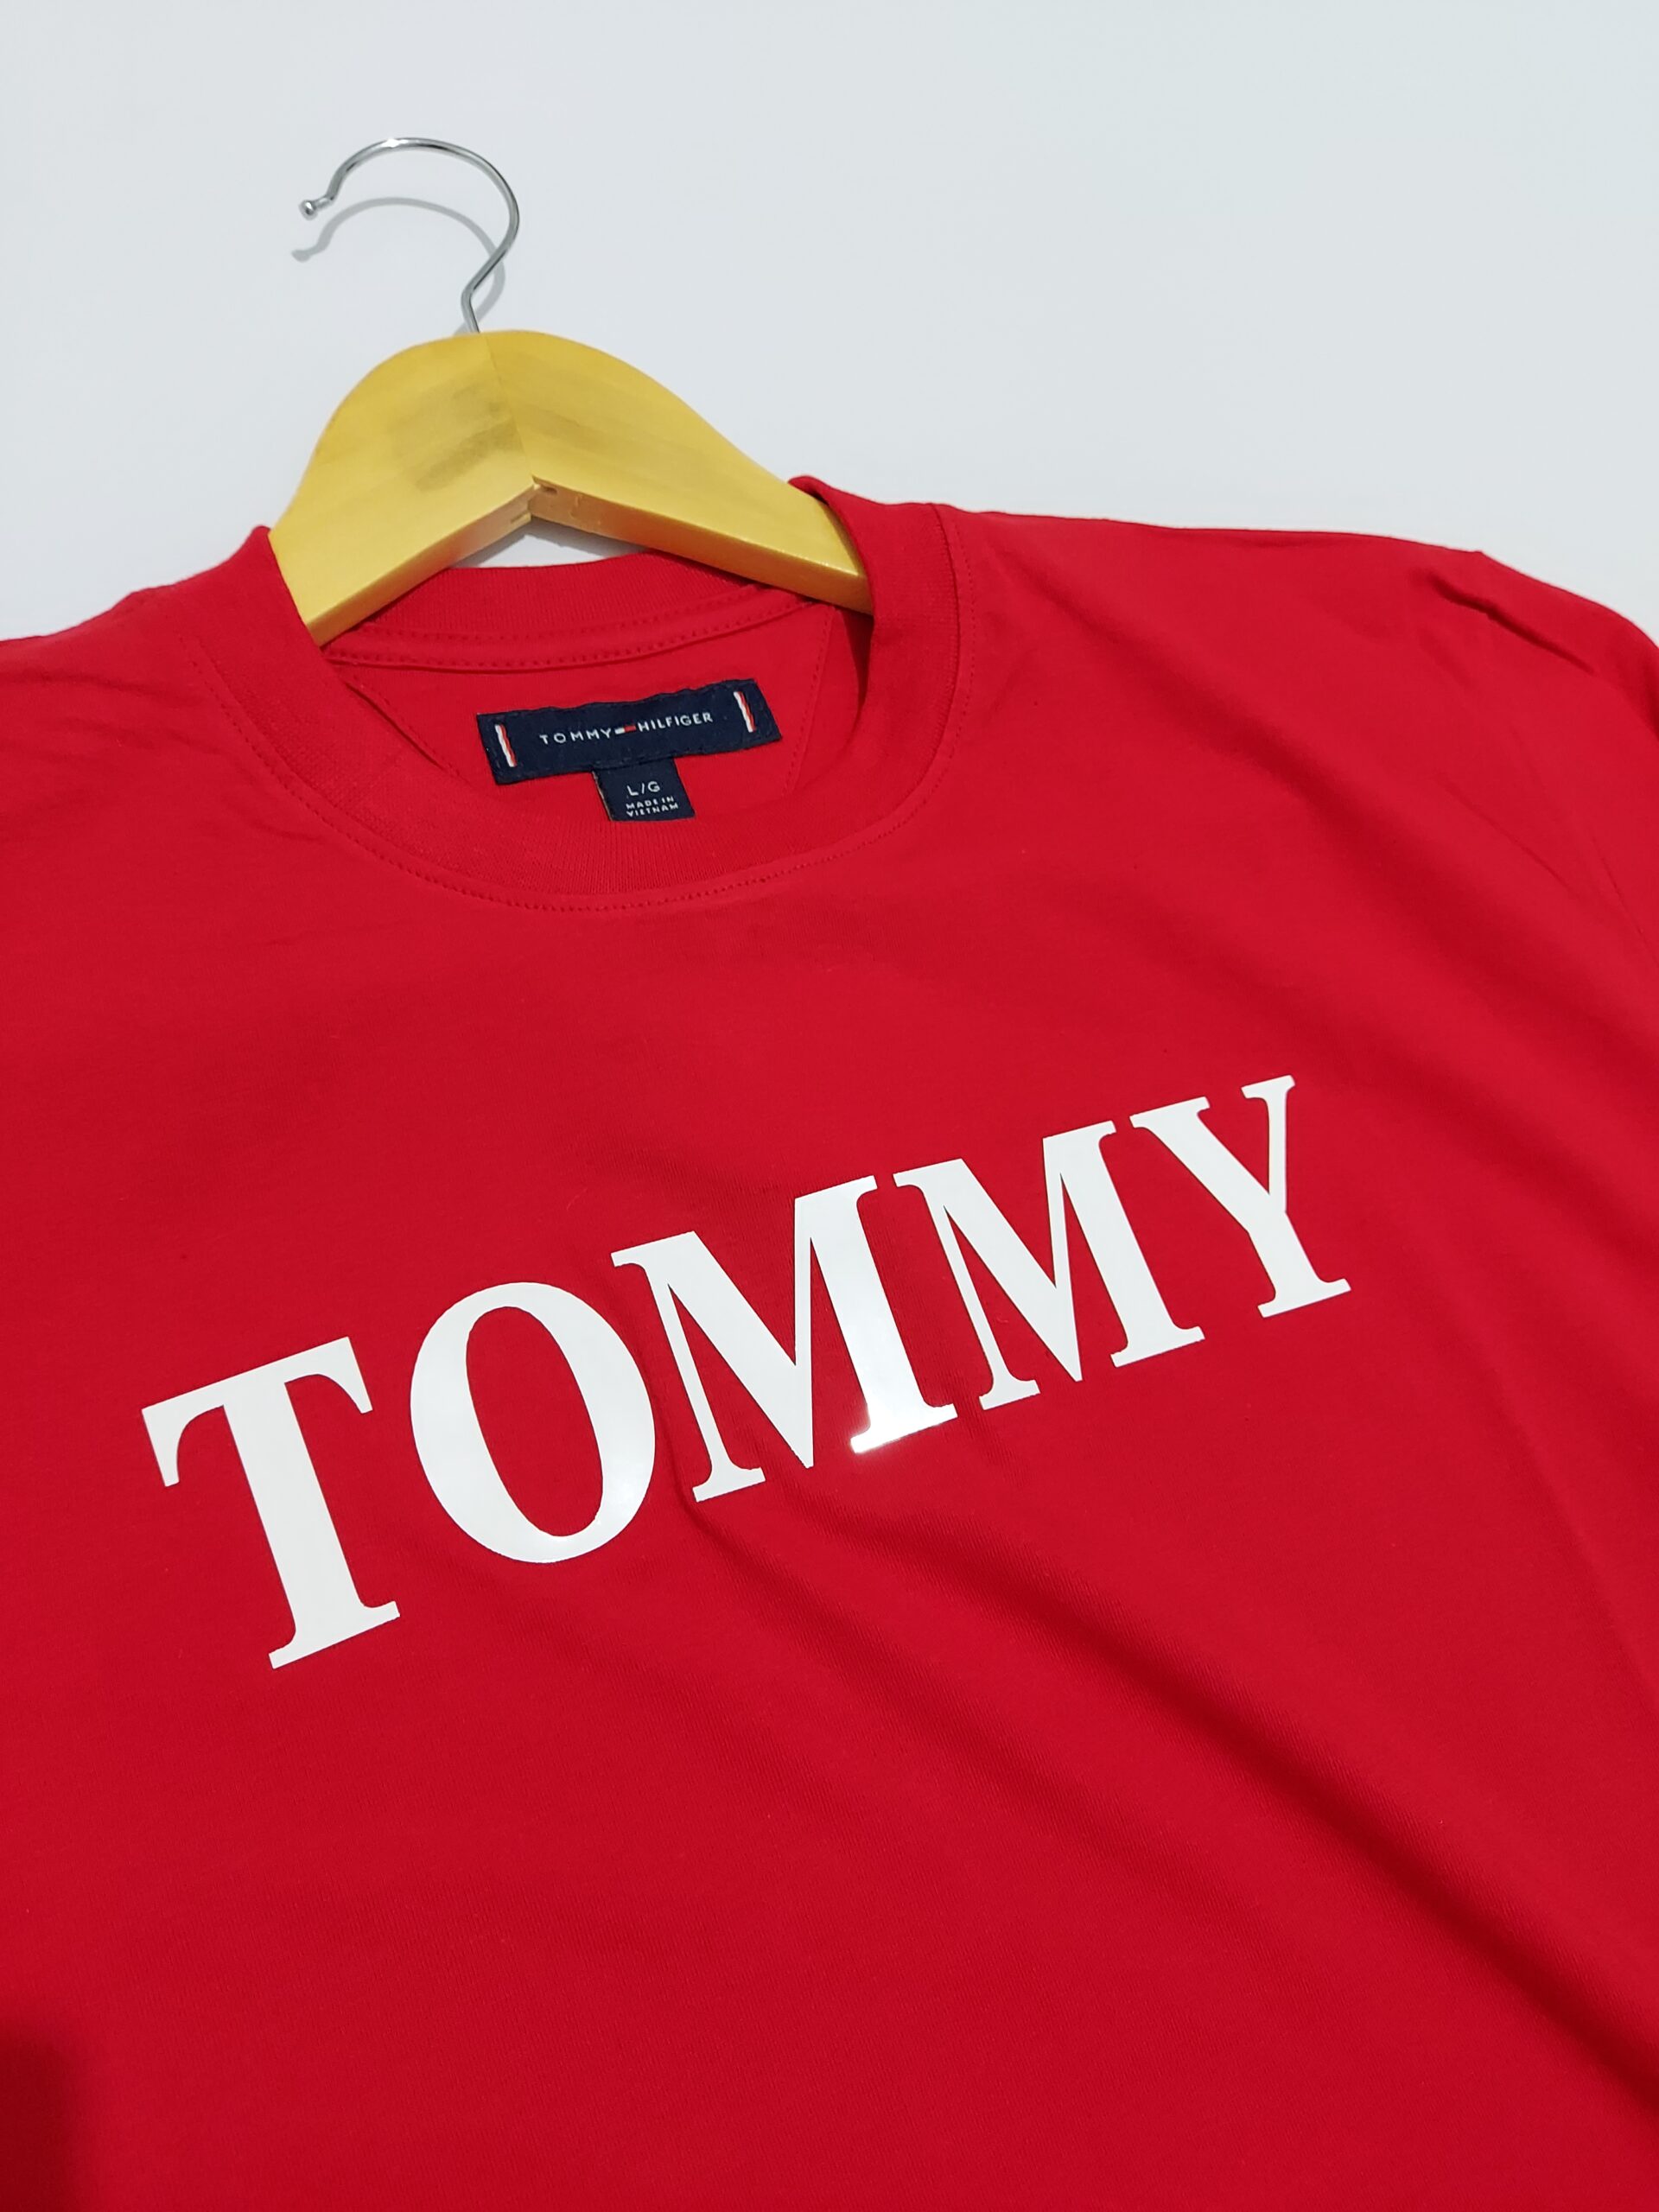 Camiseta Tommy Hilfiger Vermelha - Pck Imports